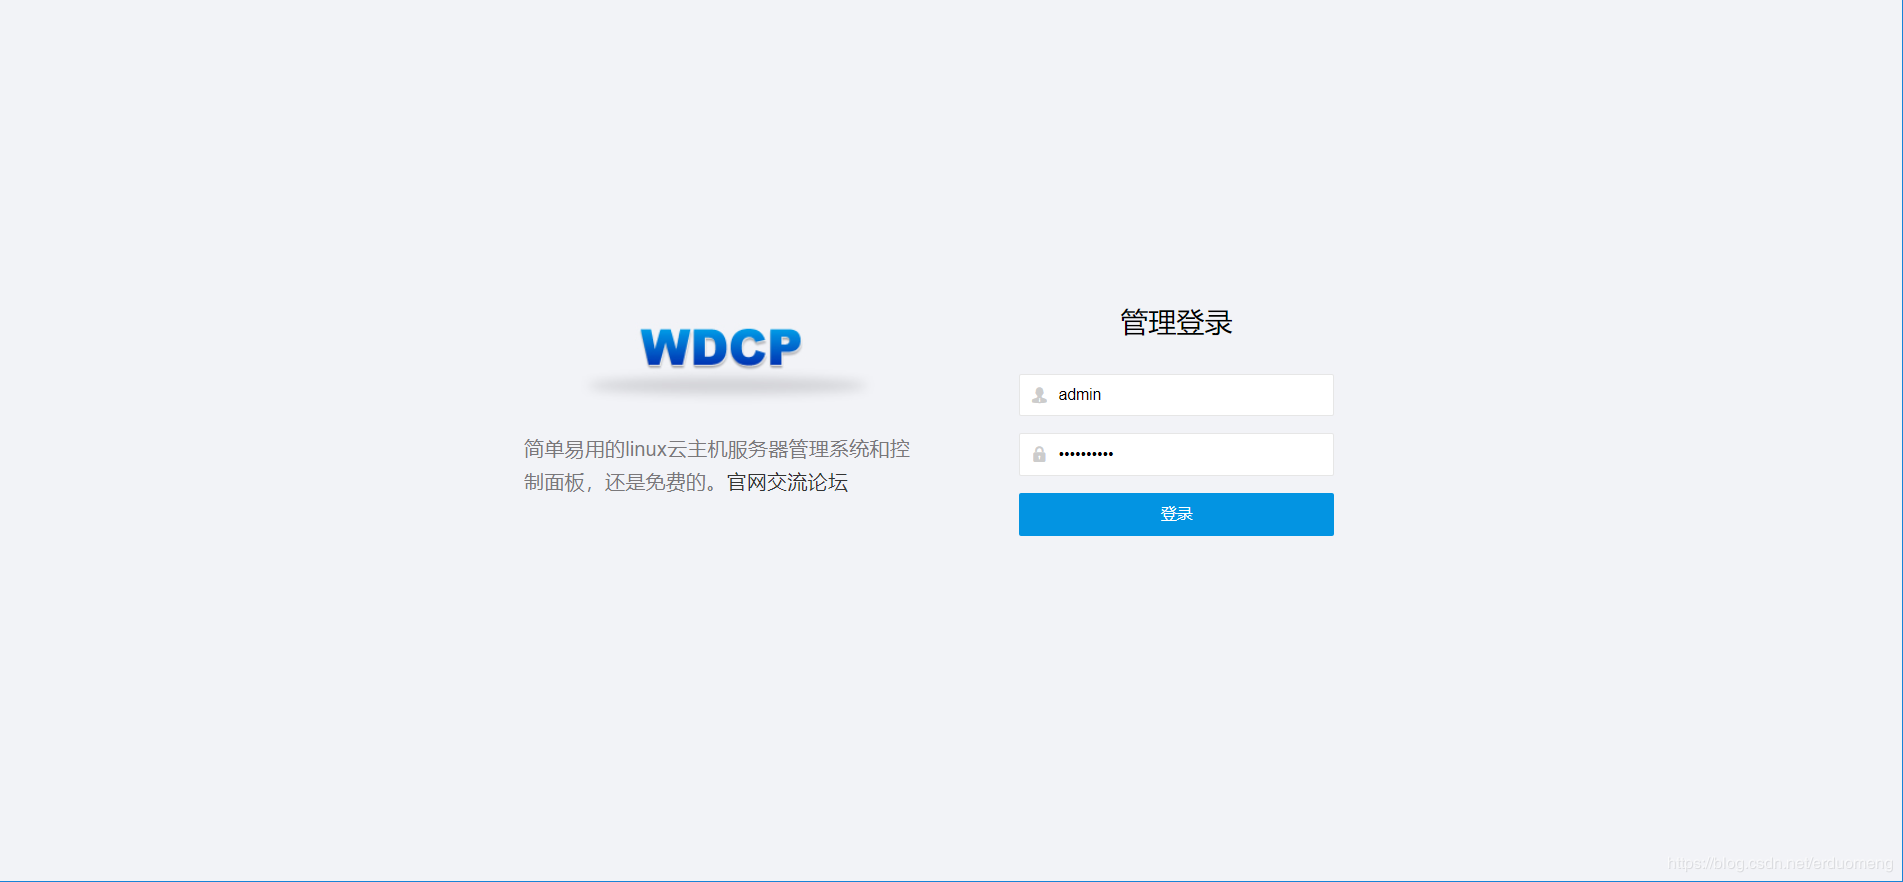 wdcp login page